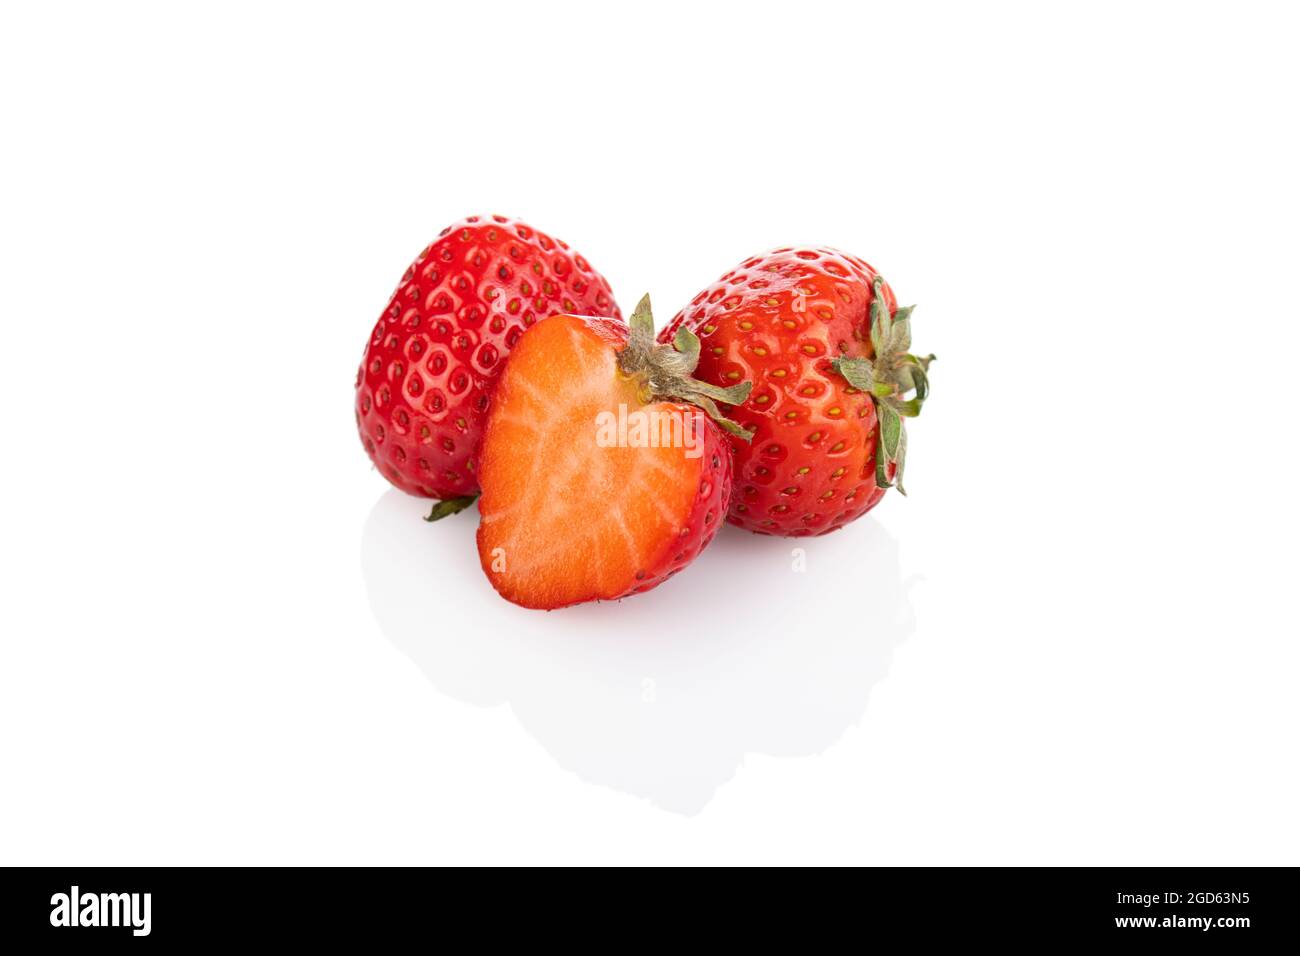 Strawberry. Sliced strawberrys on a white background Stock Photo